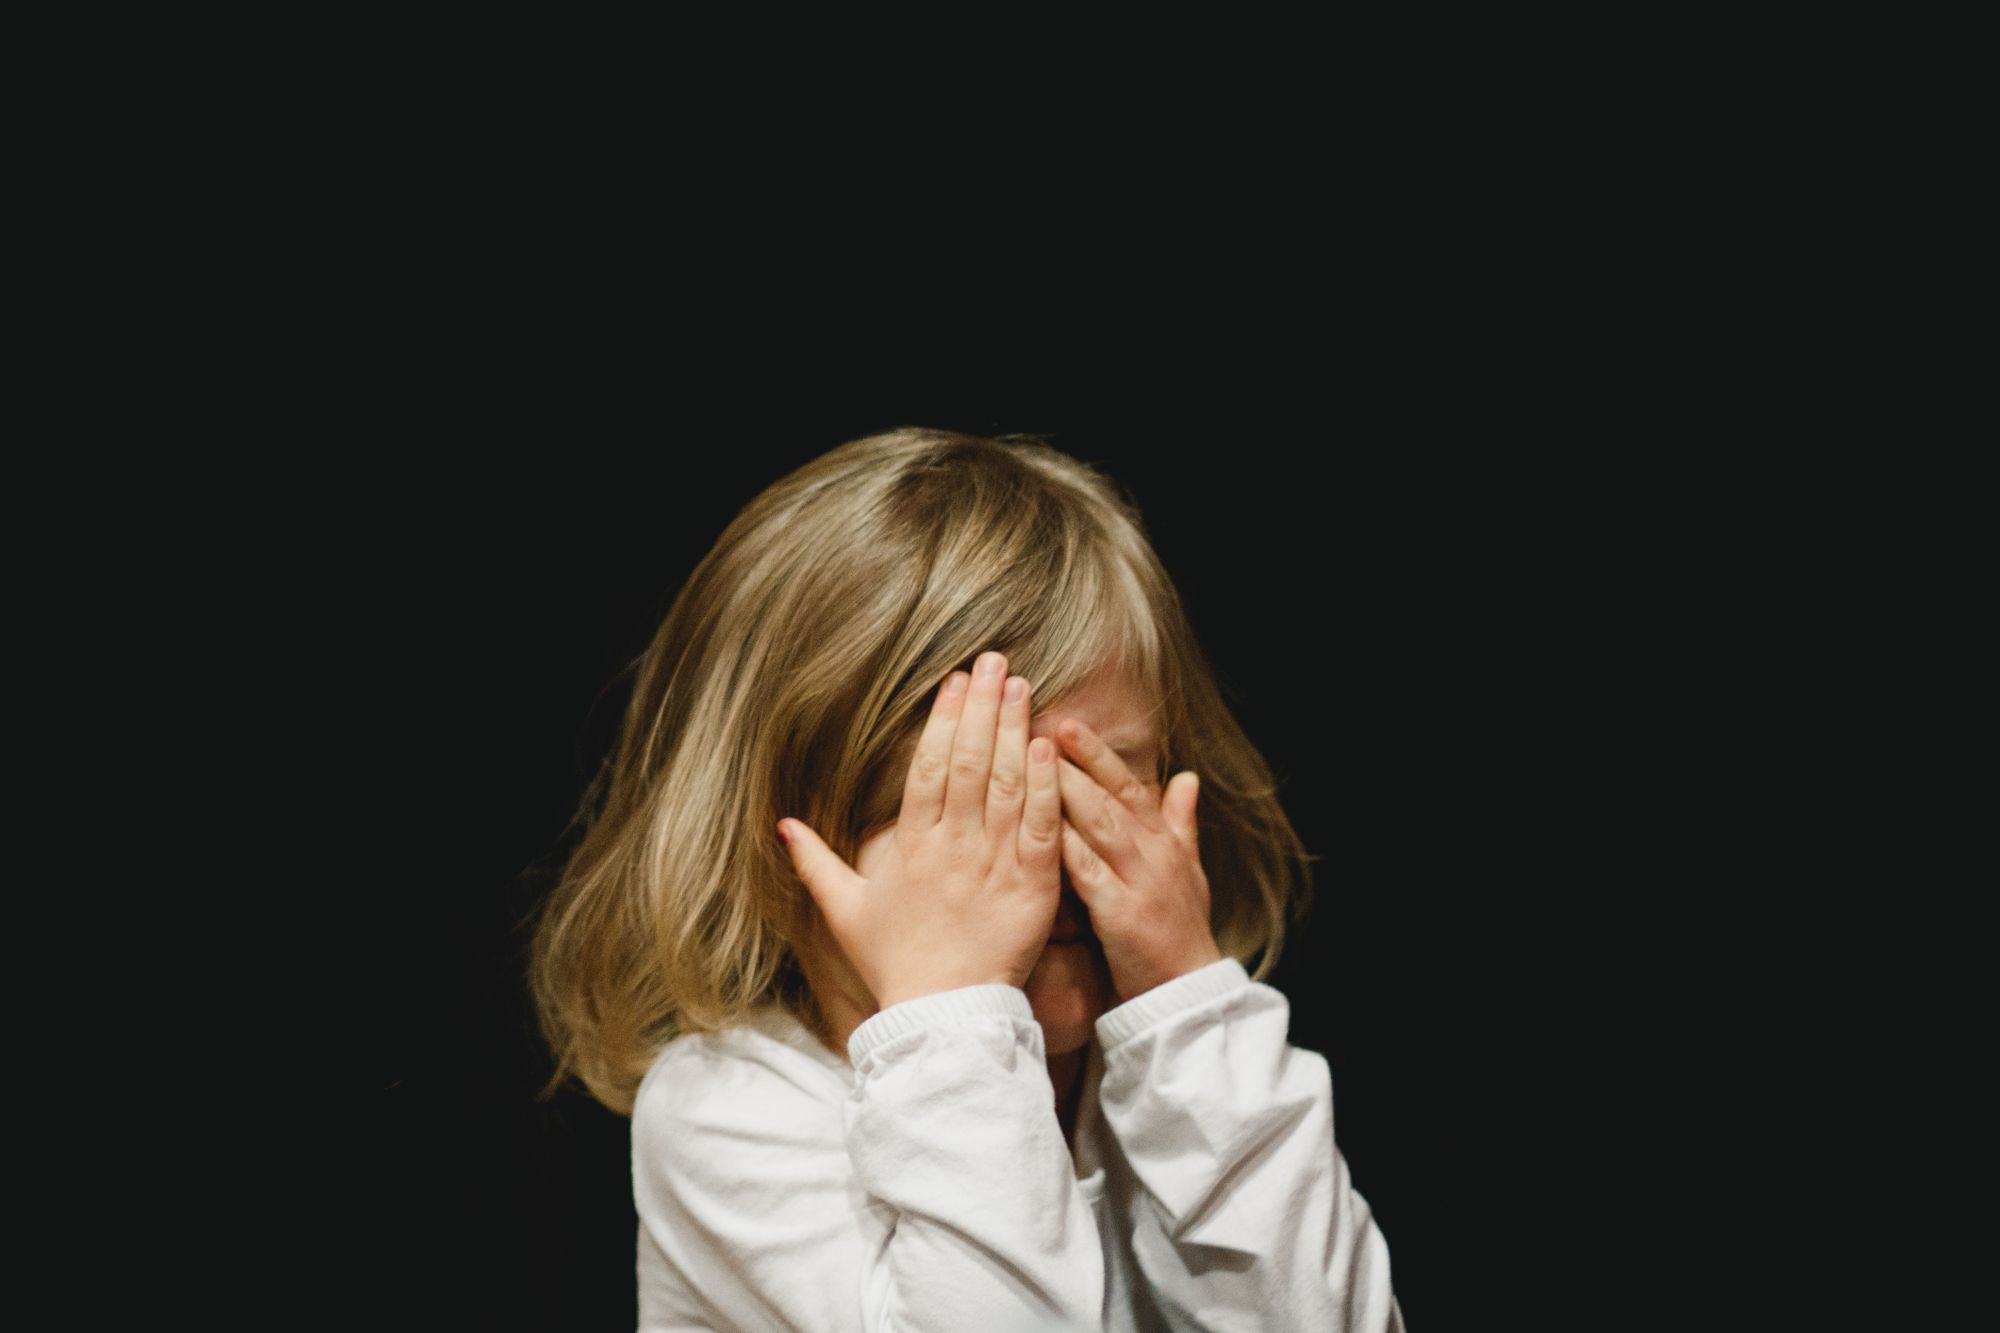 A child hides their face behind their hands